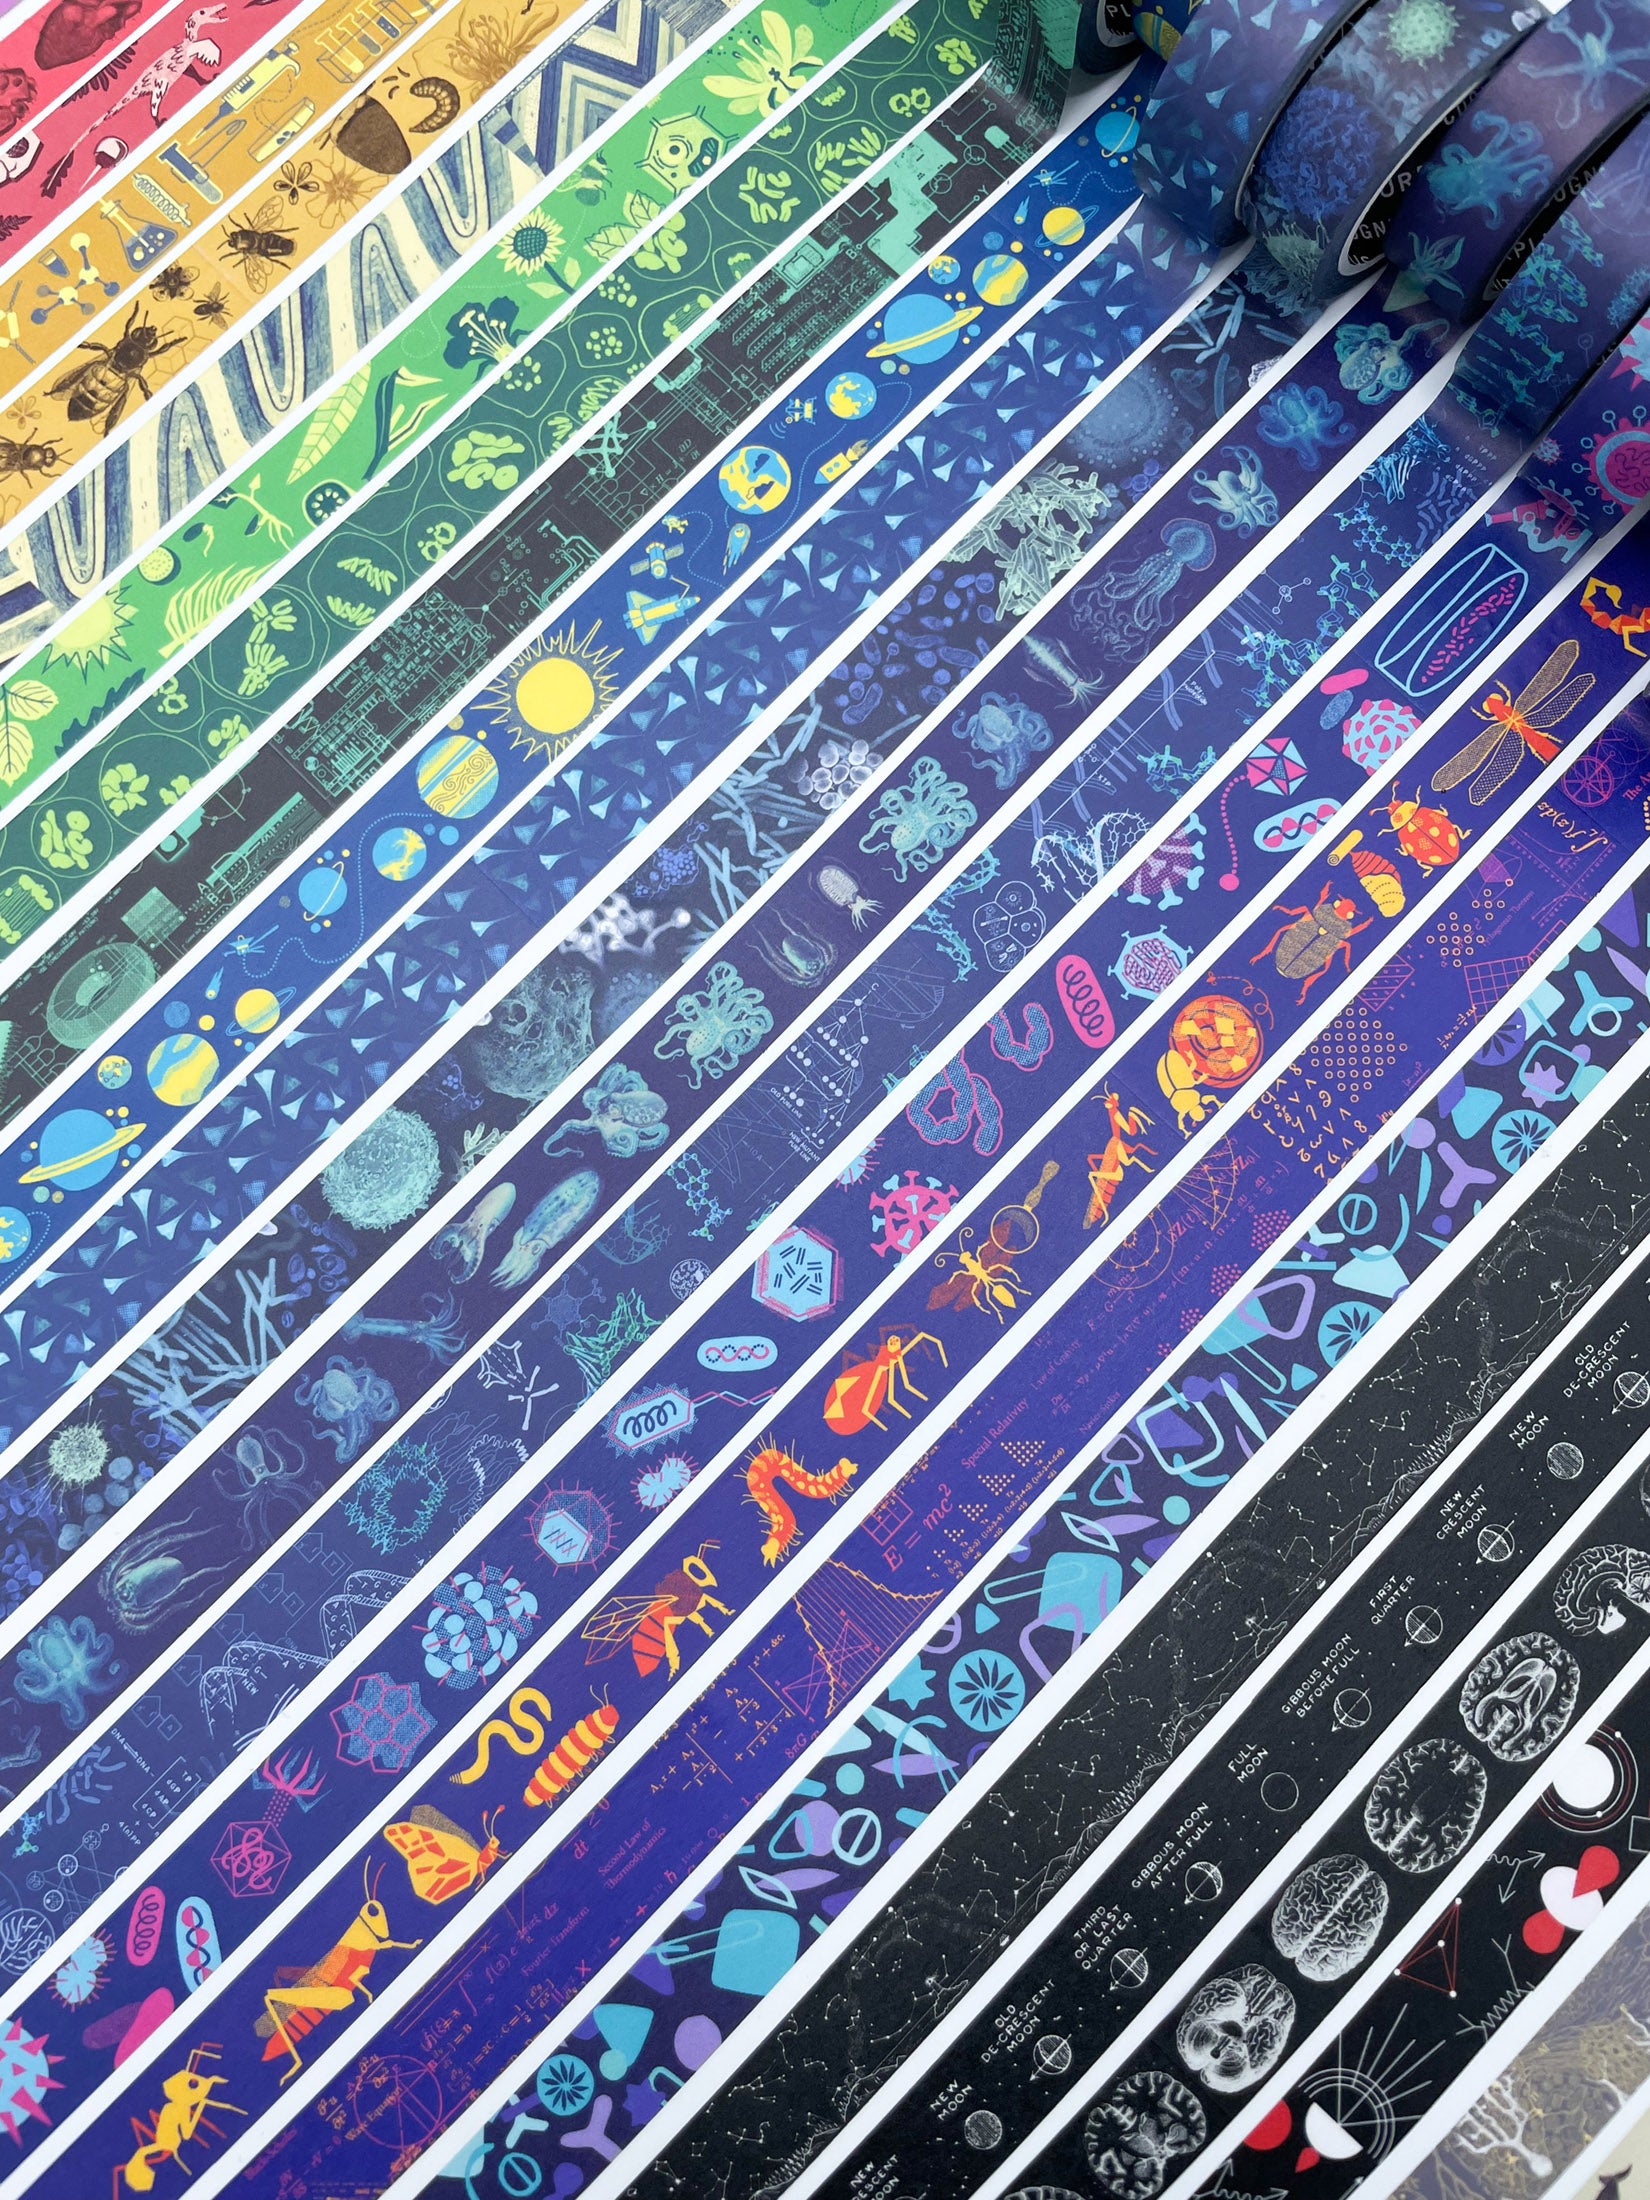 Colorful Day Washi Tape 10-Pack - Kawaii Pen Shop - Cutsy World